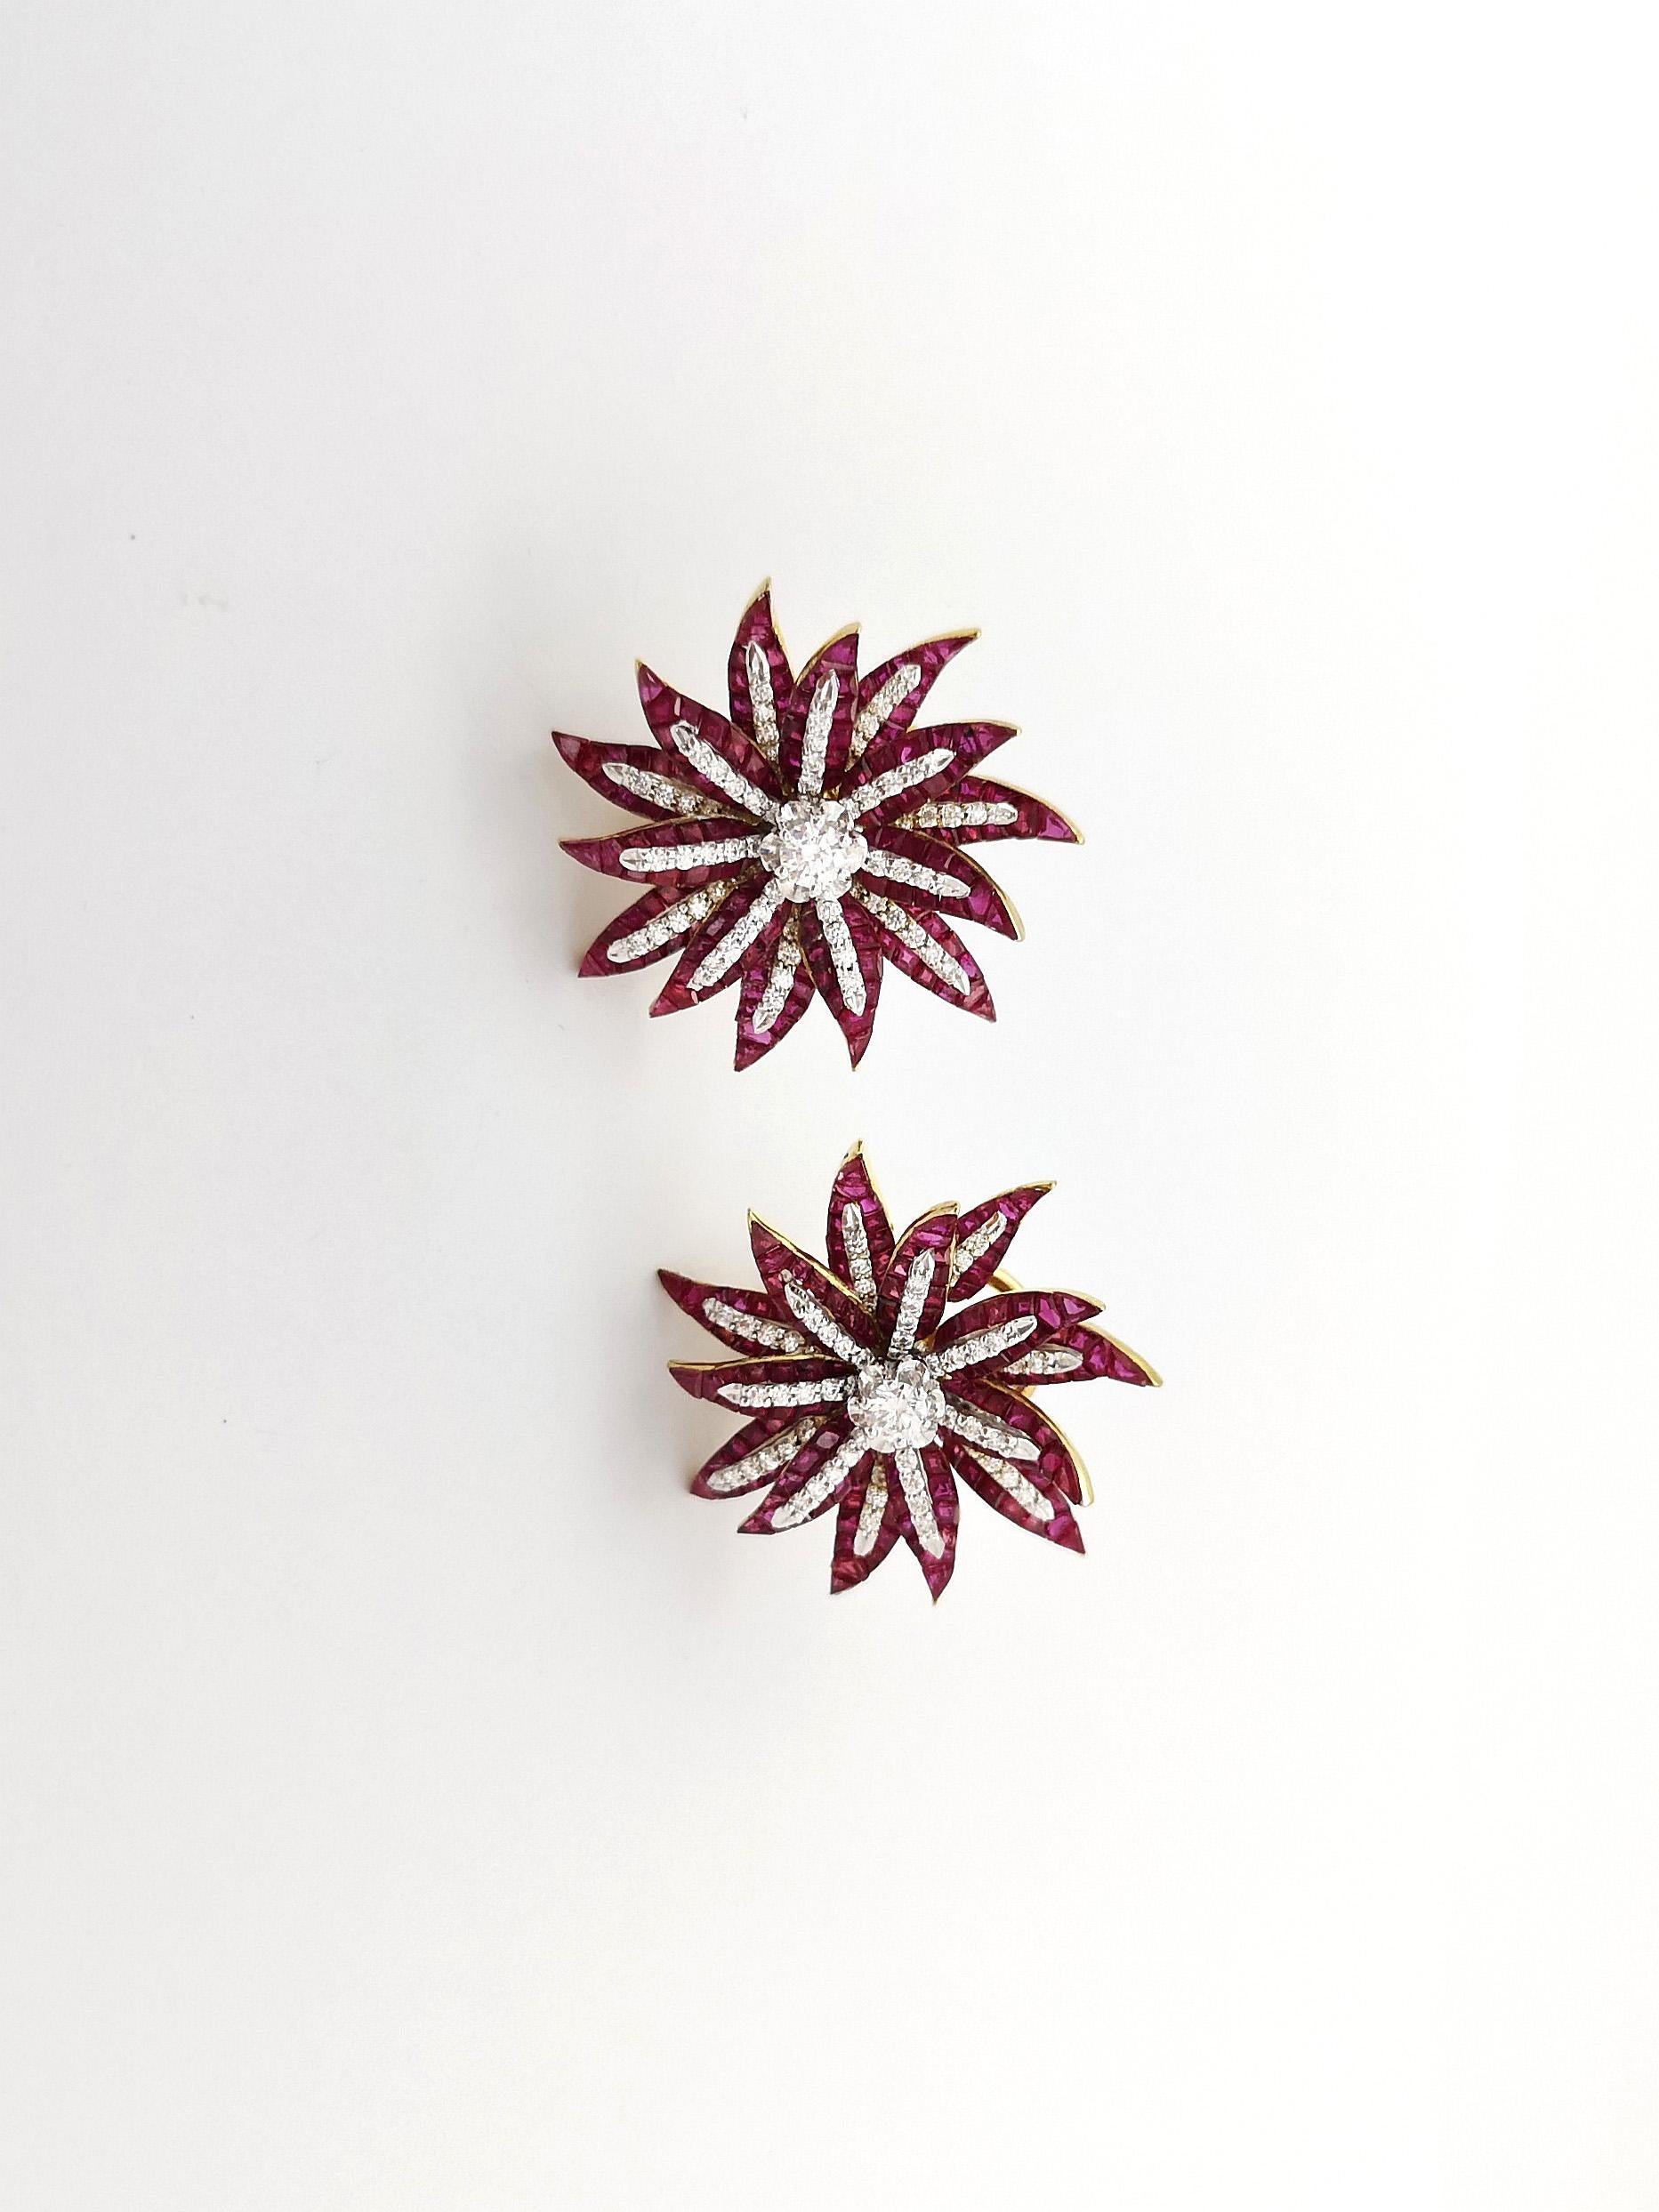 Brilliant Cut Ruby with Diamond Flower Earrings set in 18K Gold Settings For Sale